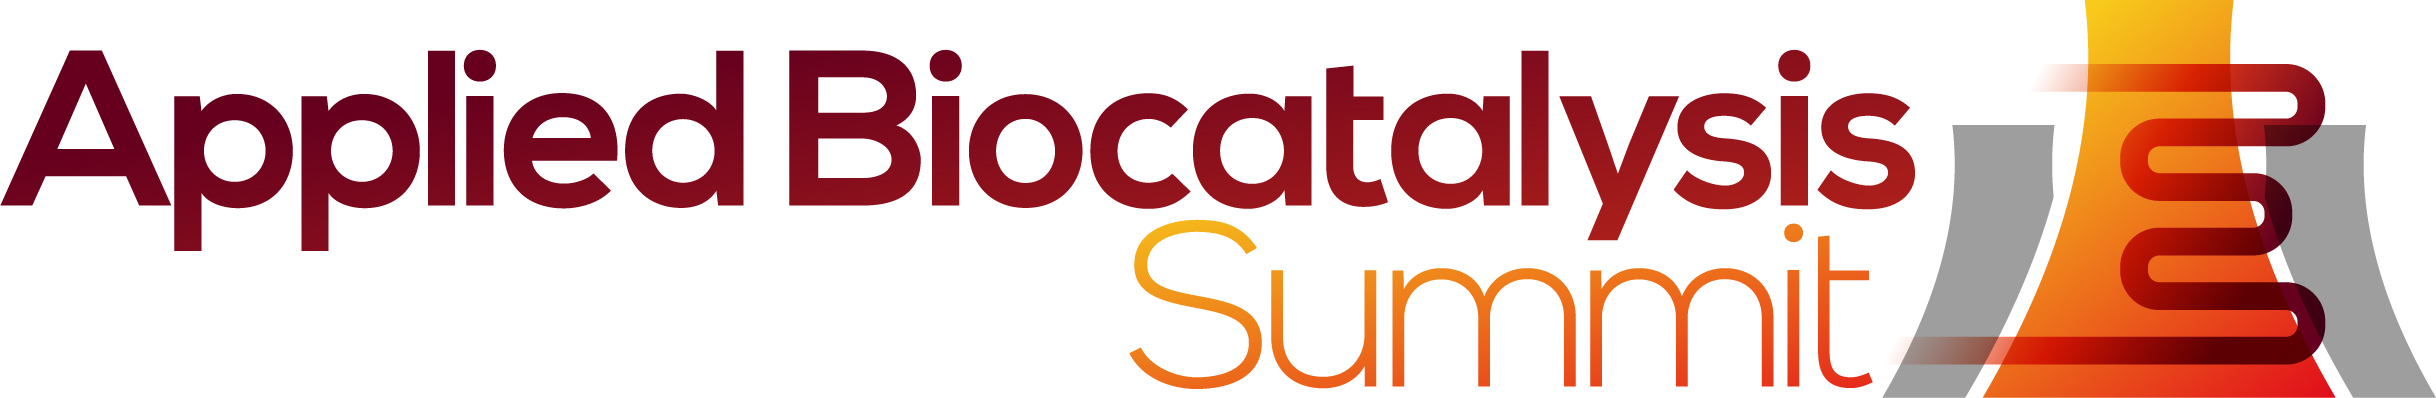 Applied Biocatalysis Summit NO DATE logo